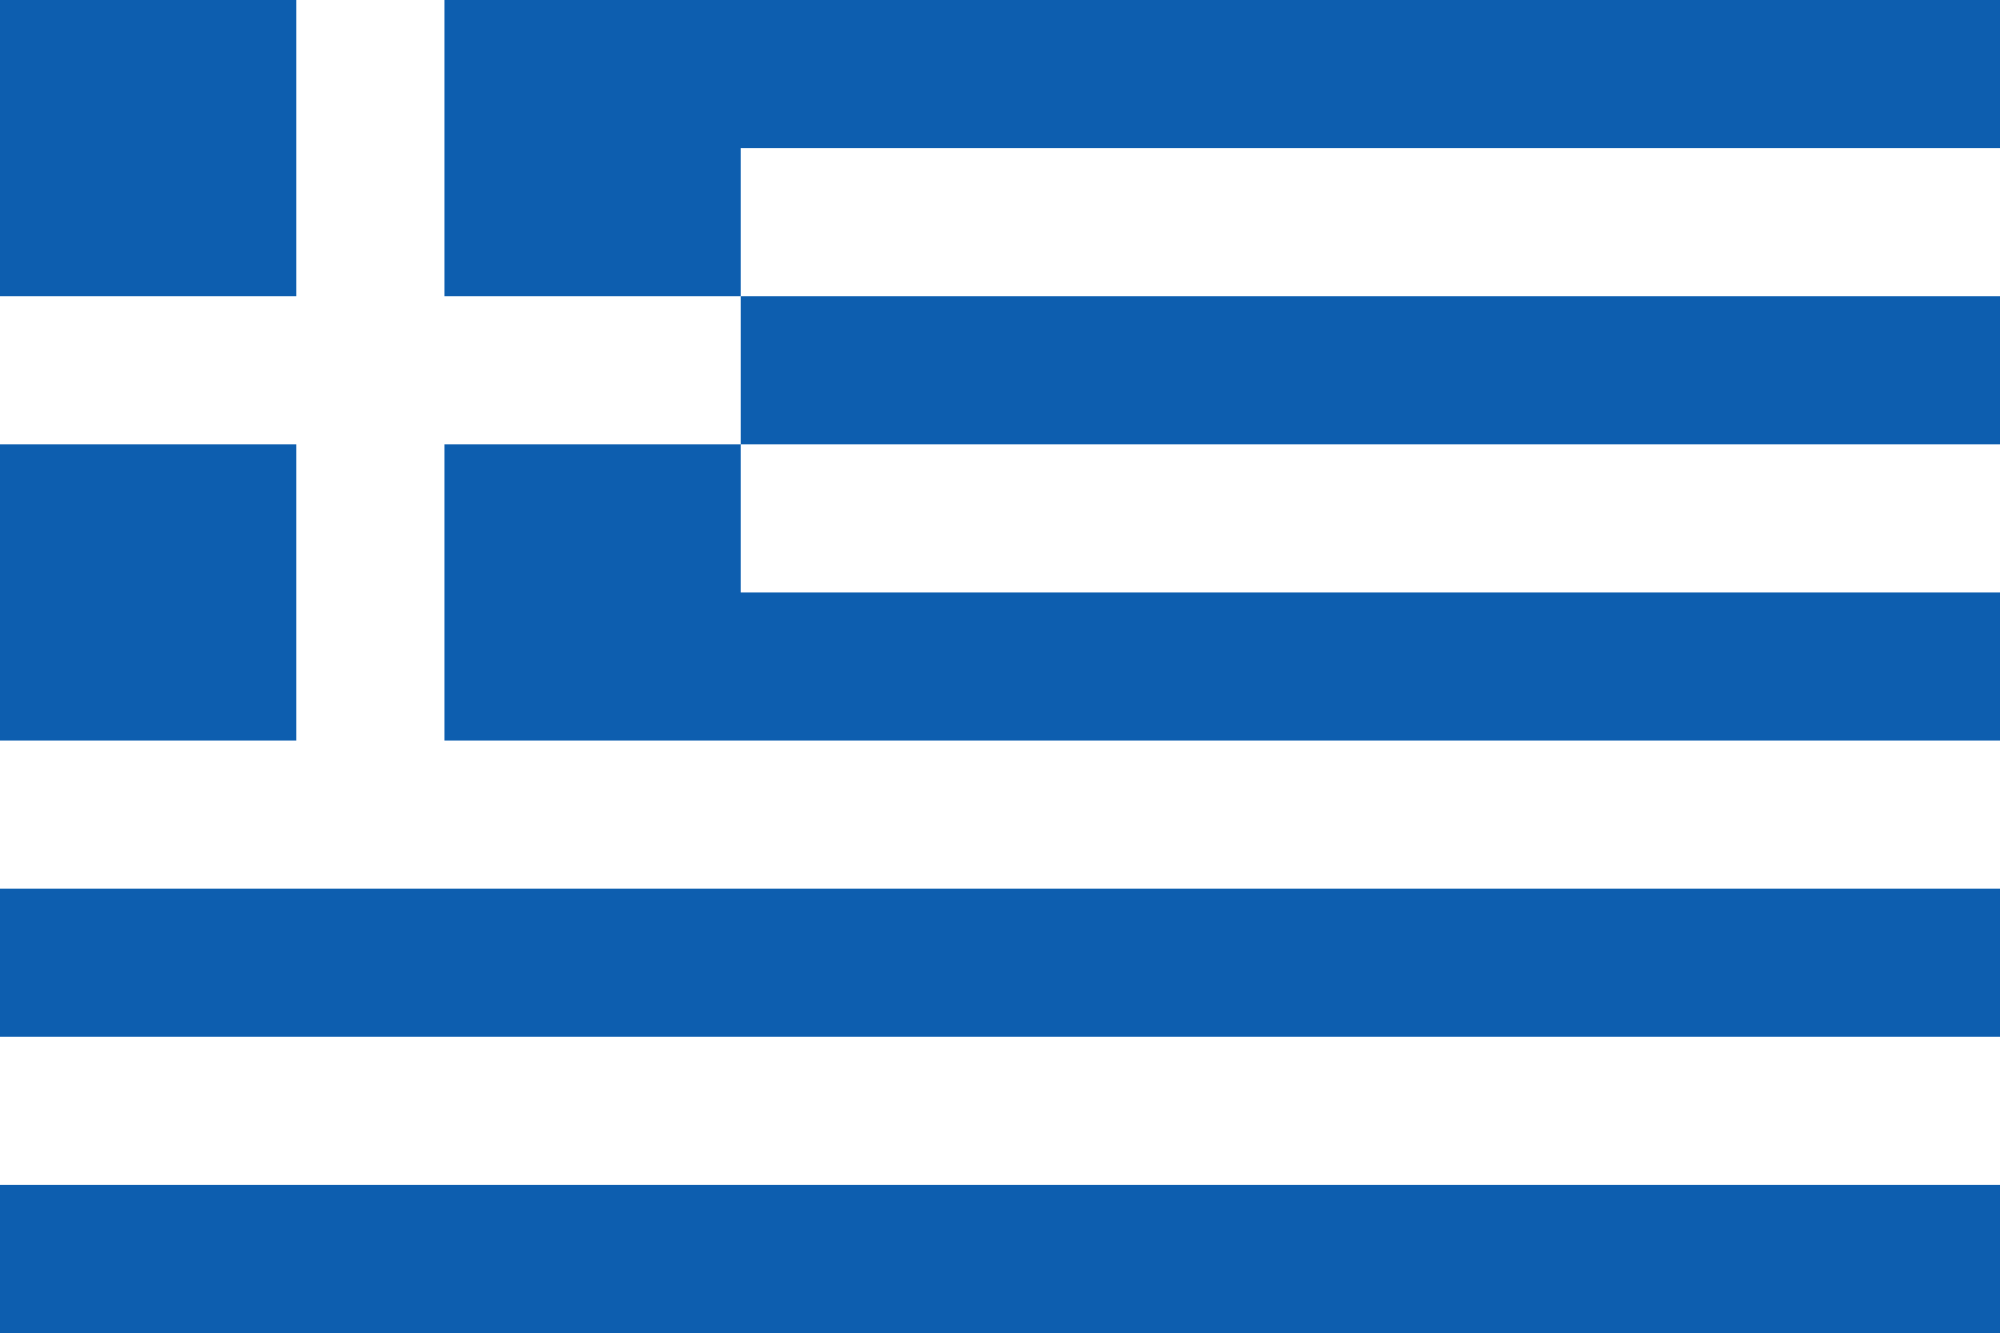 Blue Square with Line Logo - Flag of Greece